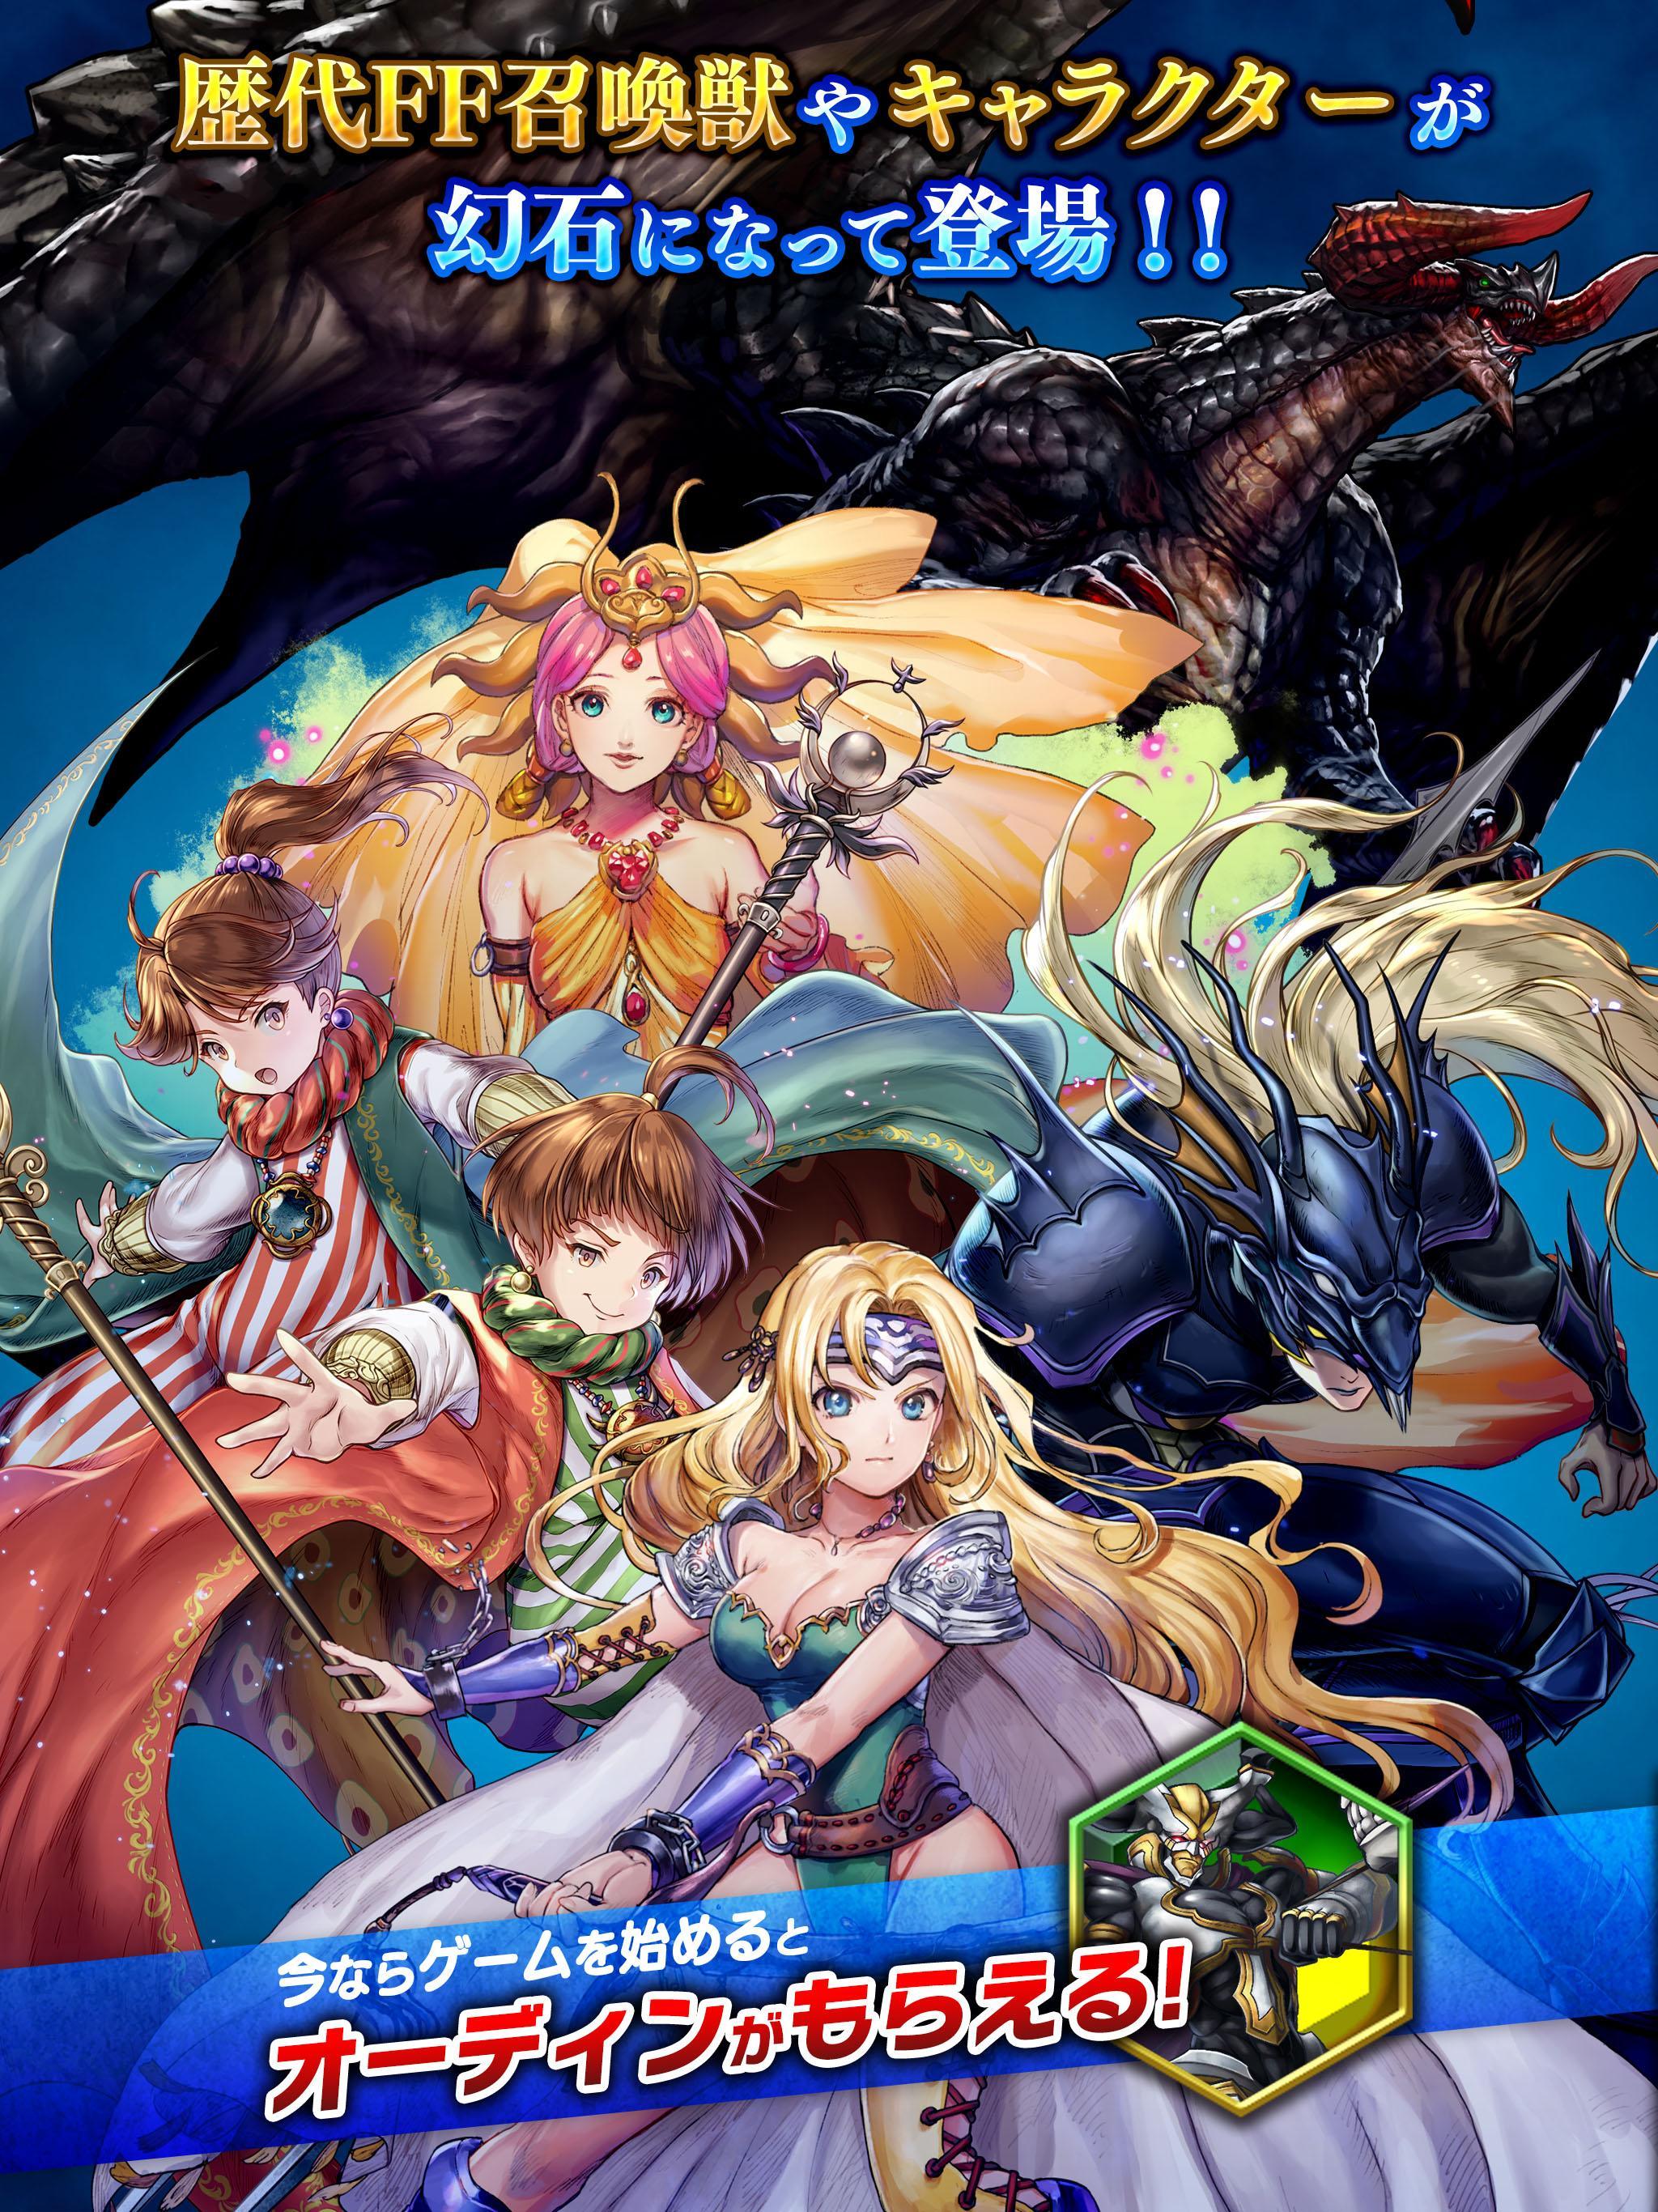 Final Fantasy Legends Ii For Android Apk Download